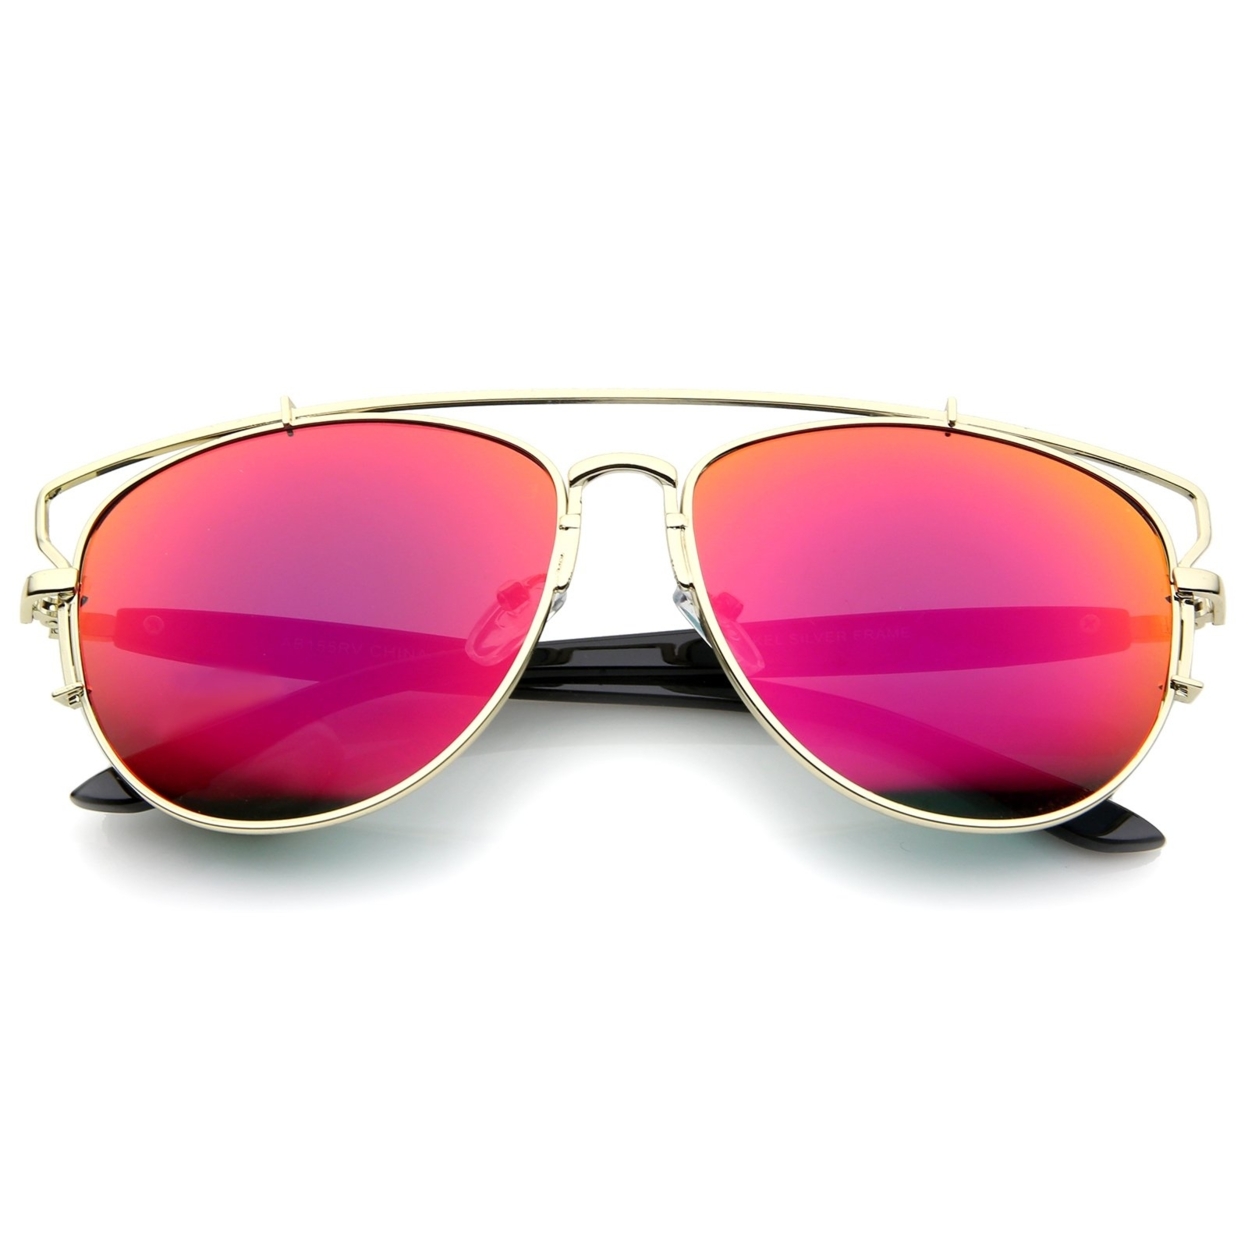 Modern Full Metal Crossbar Open Design Colored Mirror Aviator Sunglasses 58mm - Silver / Orange Mirror